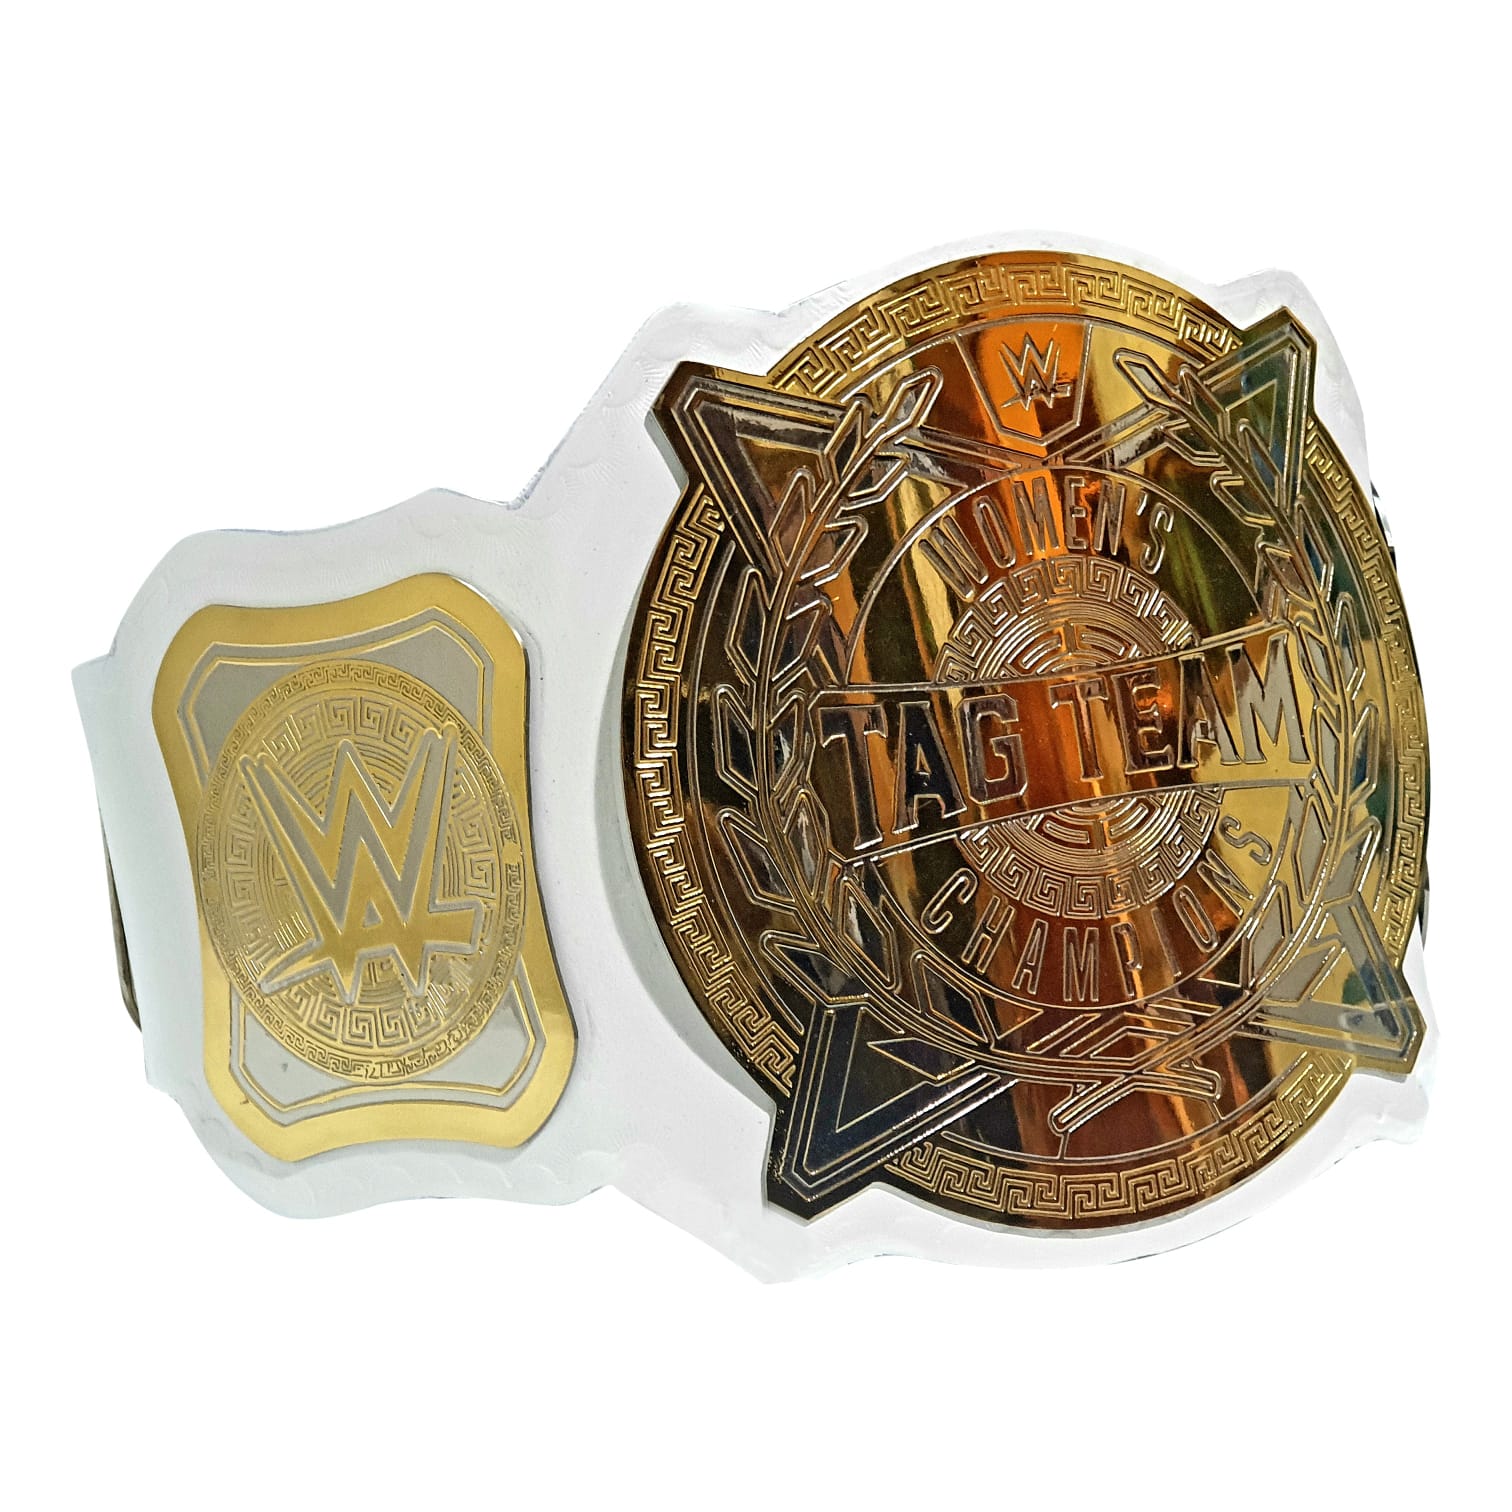 World's Greatest Championship Wresling Brass Belt-016